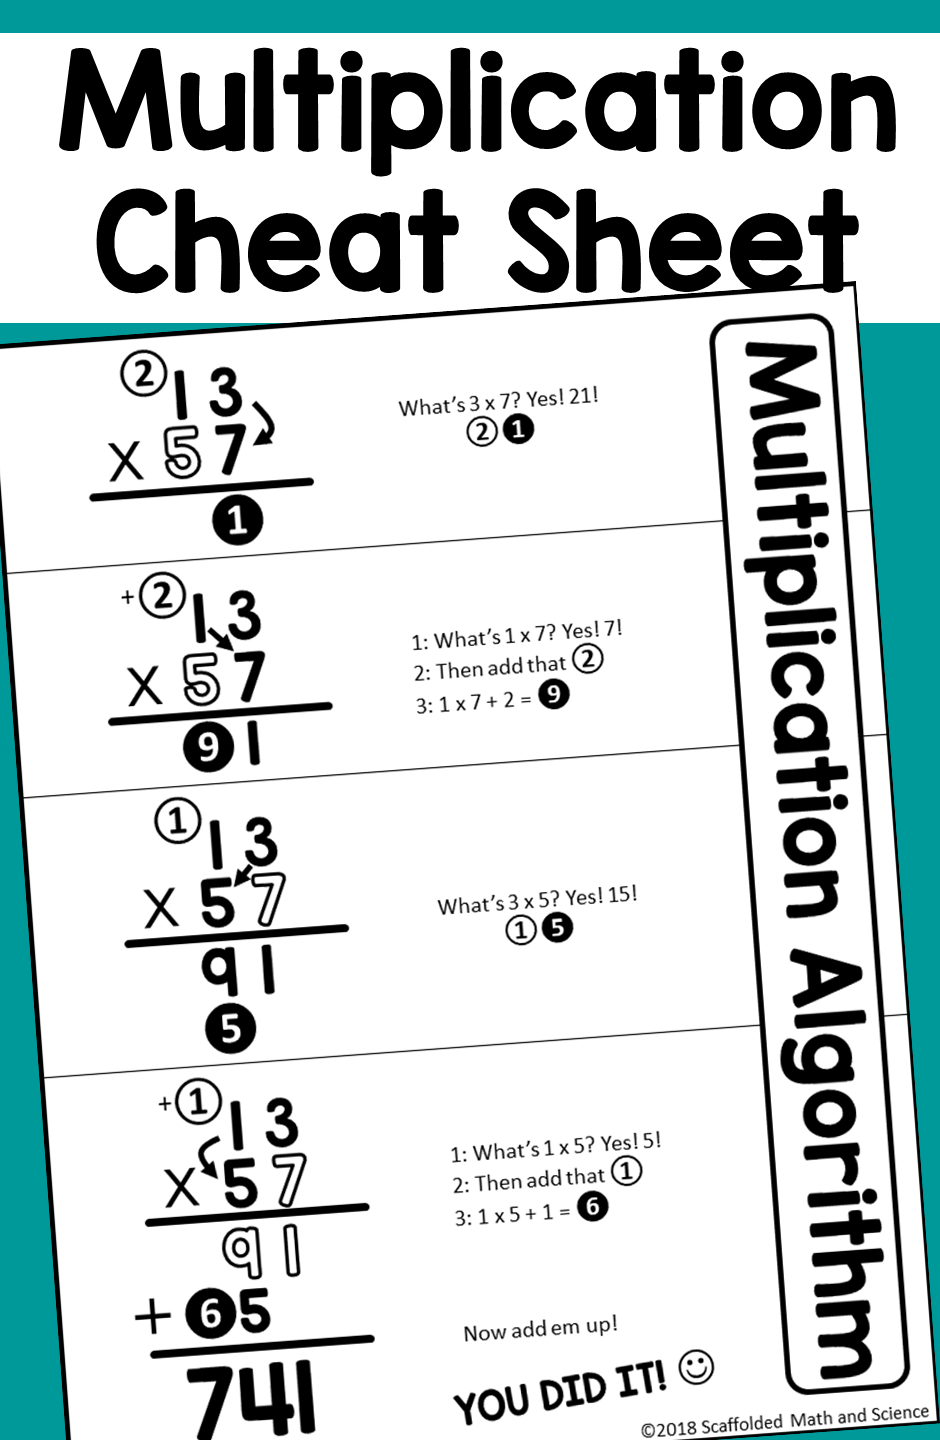 Multiplication Cheat Sheet | Multiplication Anchor Charts